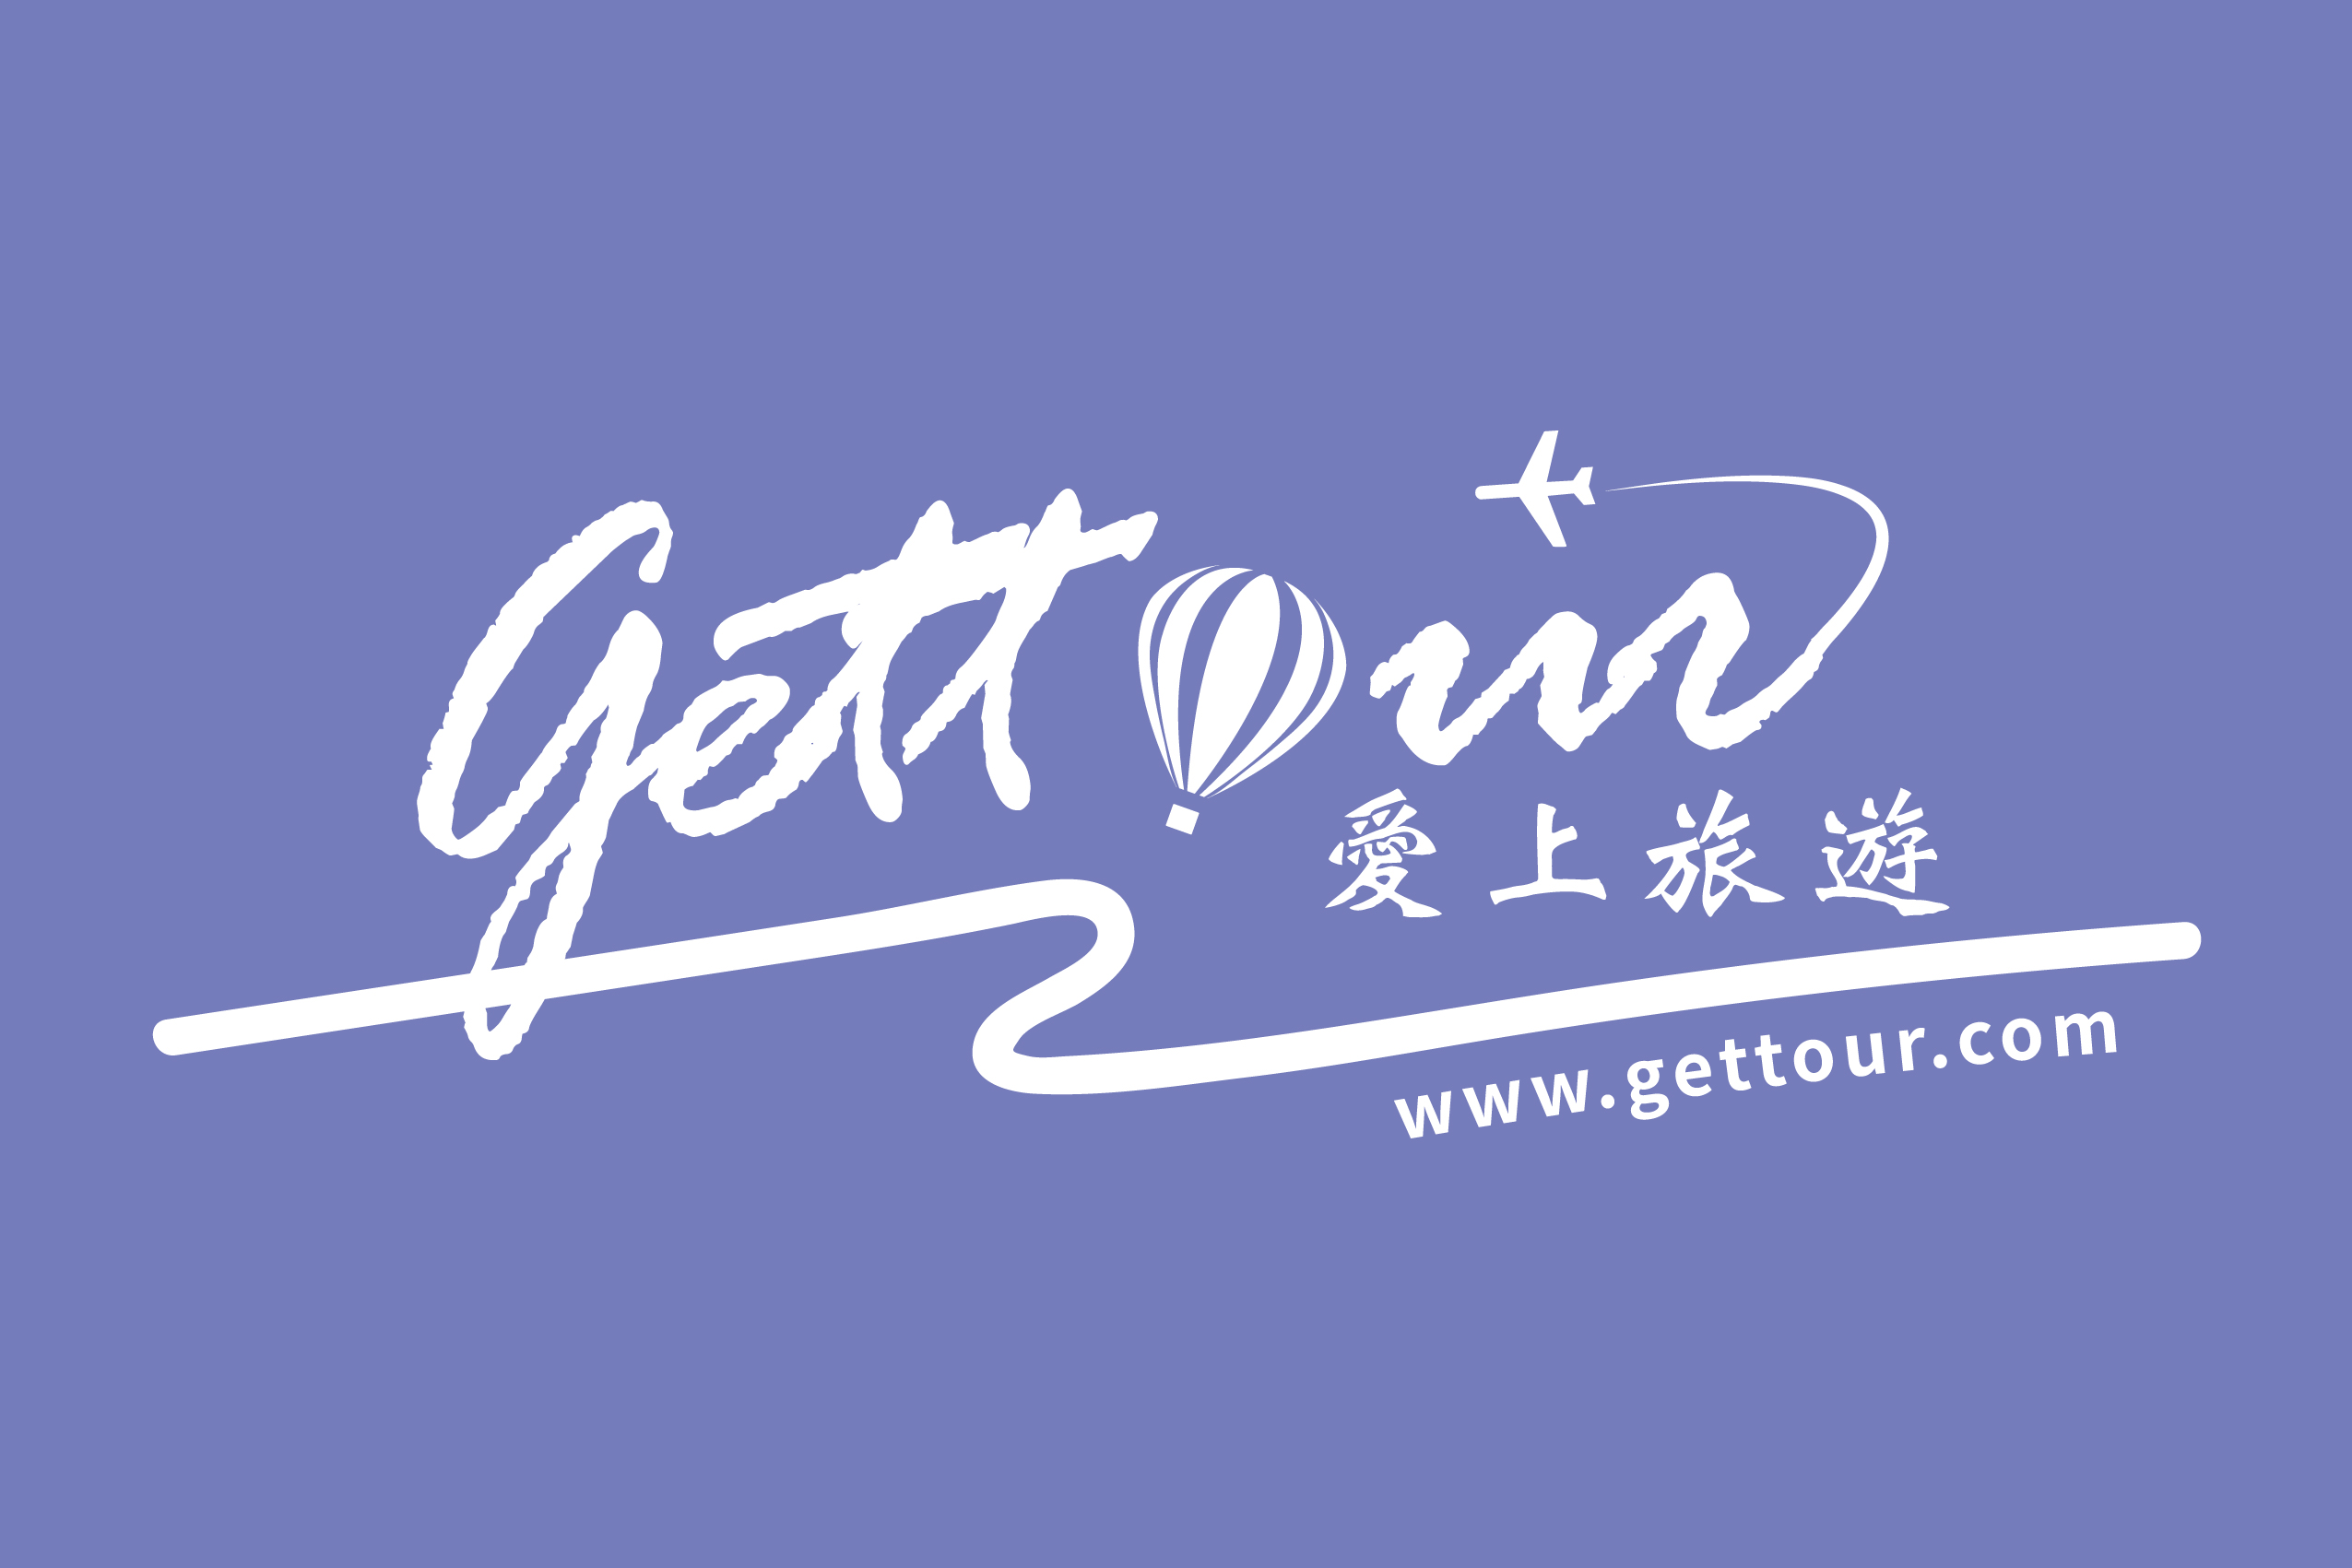 GetTour